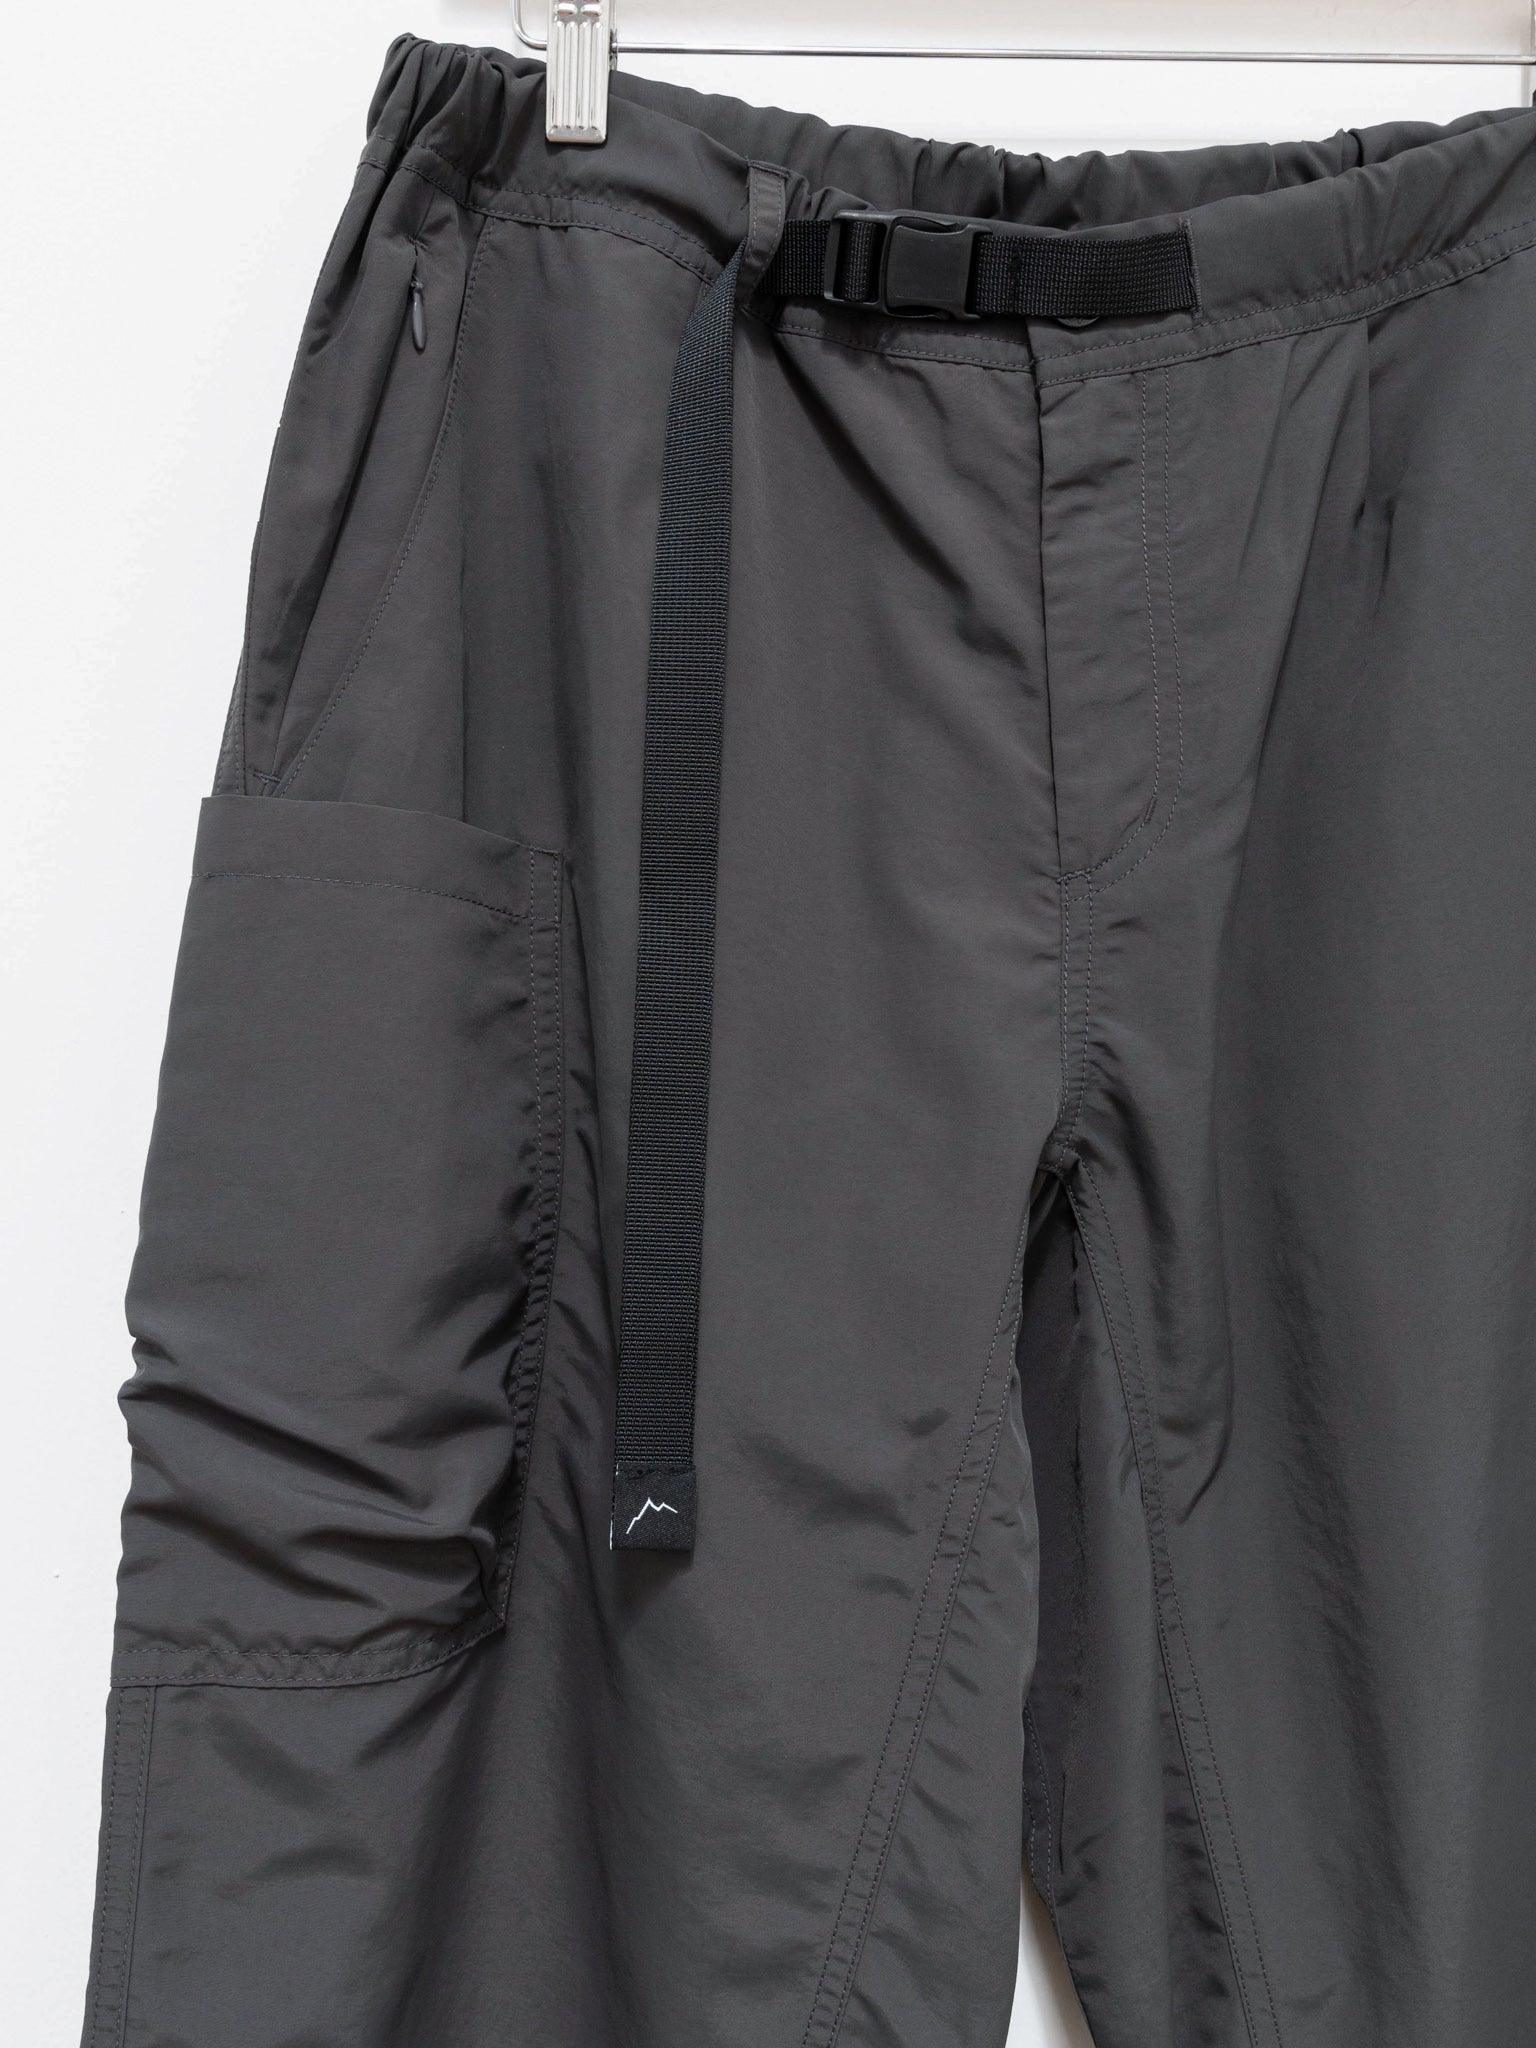 Namu Shop - CAYL Multi Pocket Pants - Gray